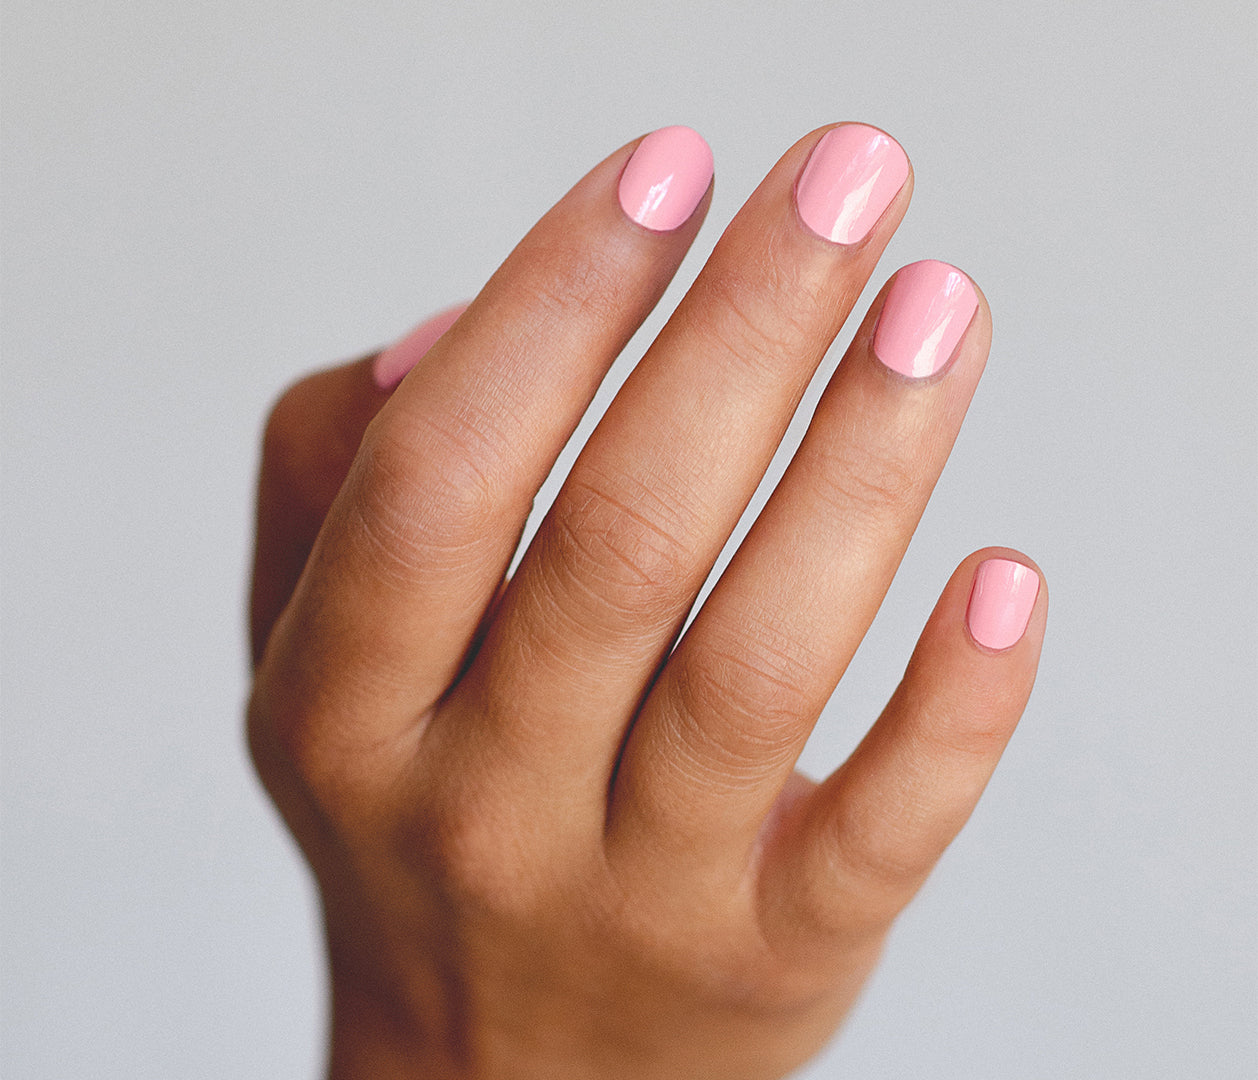 ballerina pink nail polish on tan skin tone by sienna